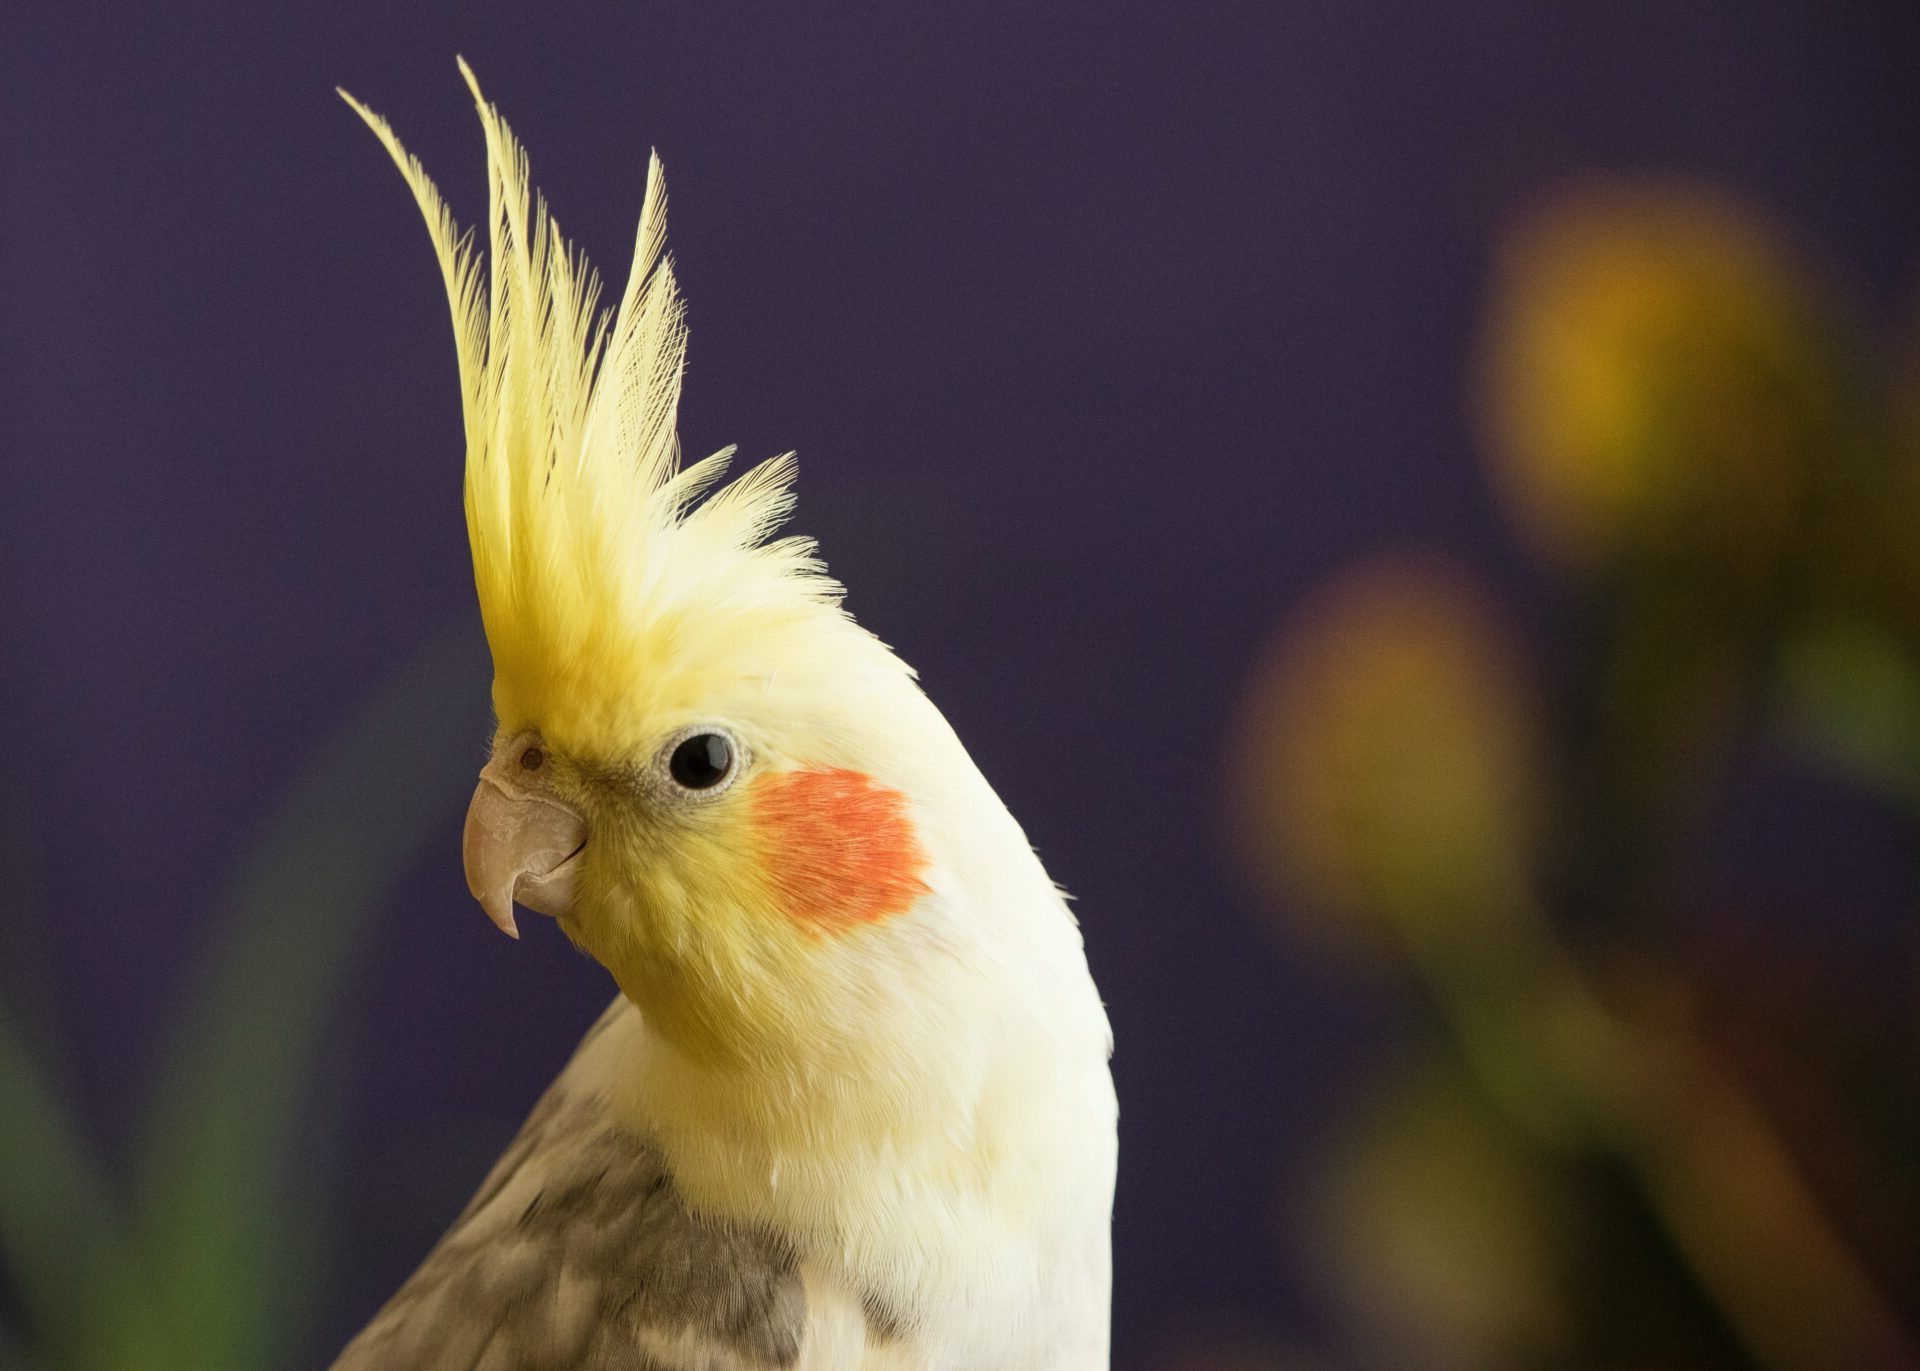 yellow bird with wild hair